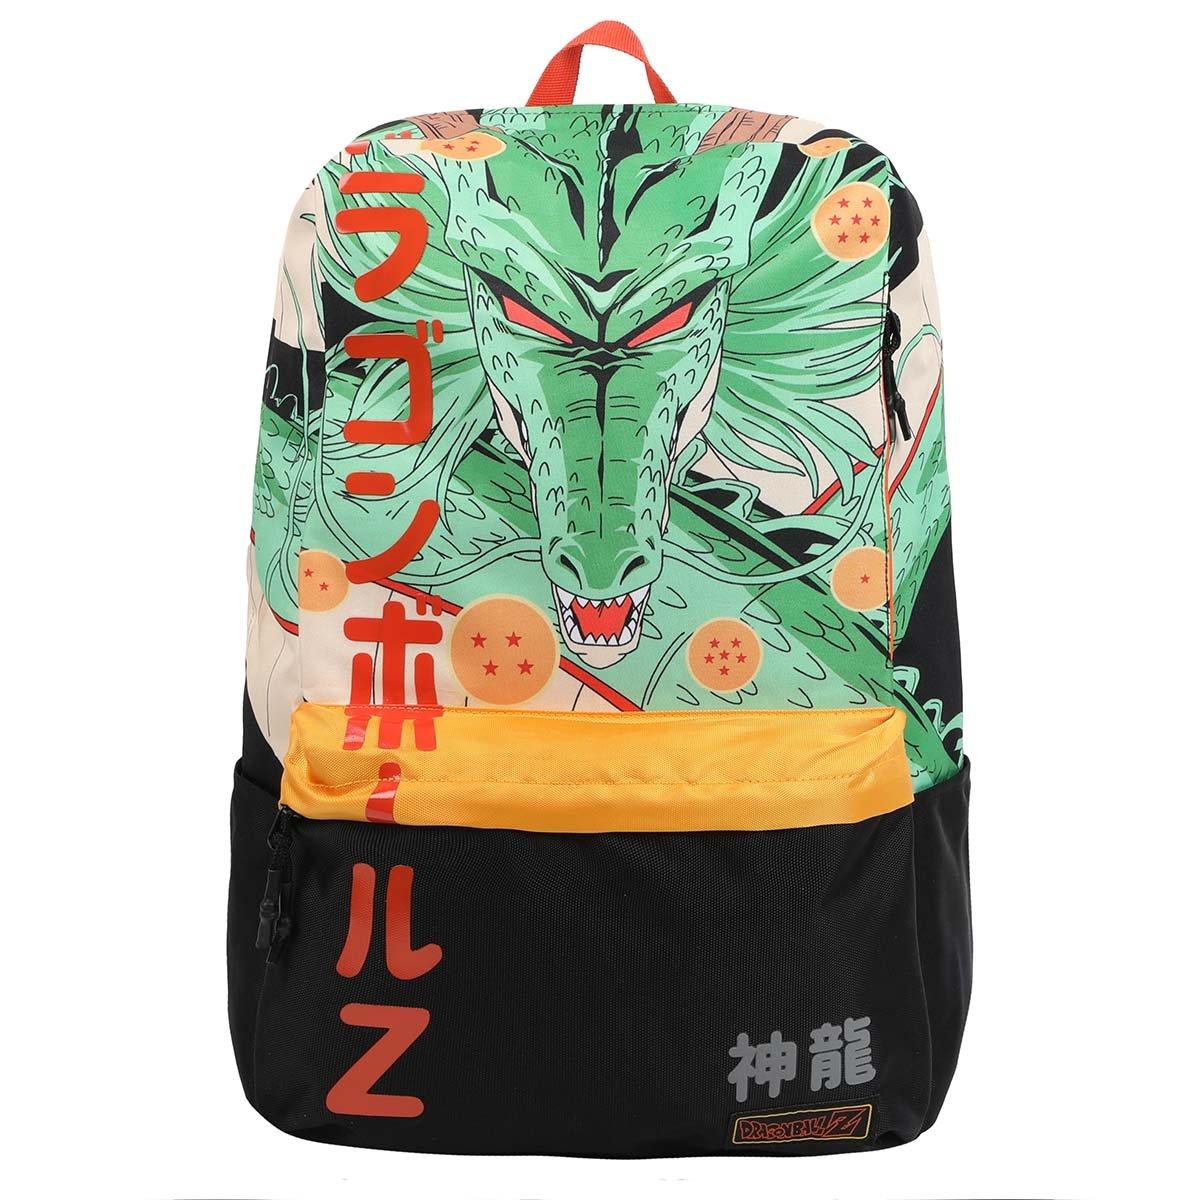 Dragon Ball Z Goku Built-Up Backpack